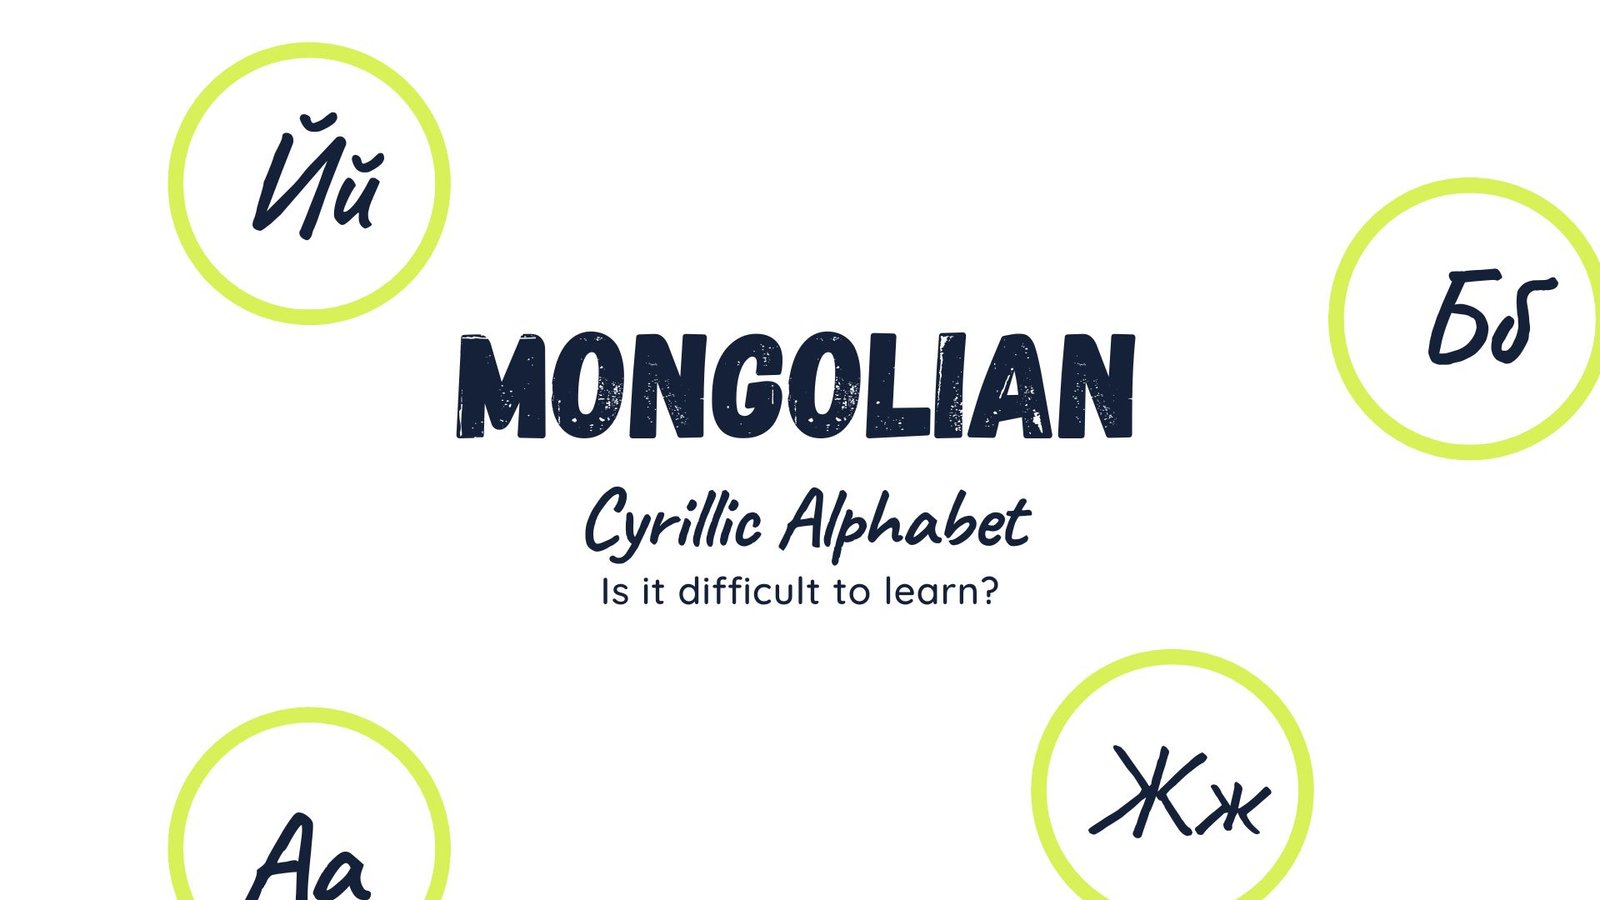 The Mongolian Cyrillic Alphabet